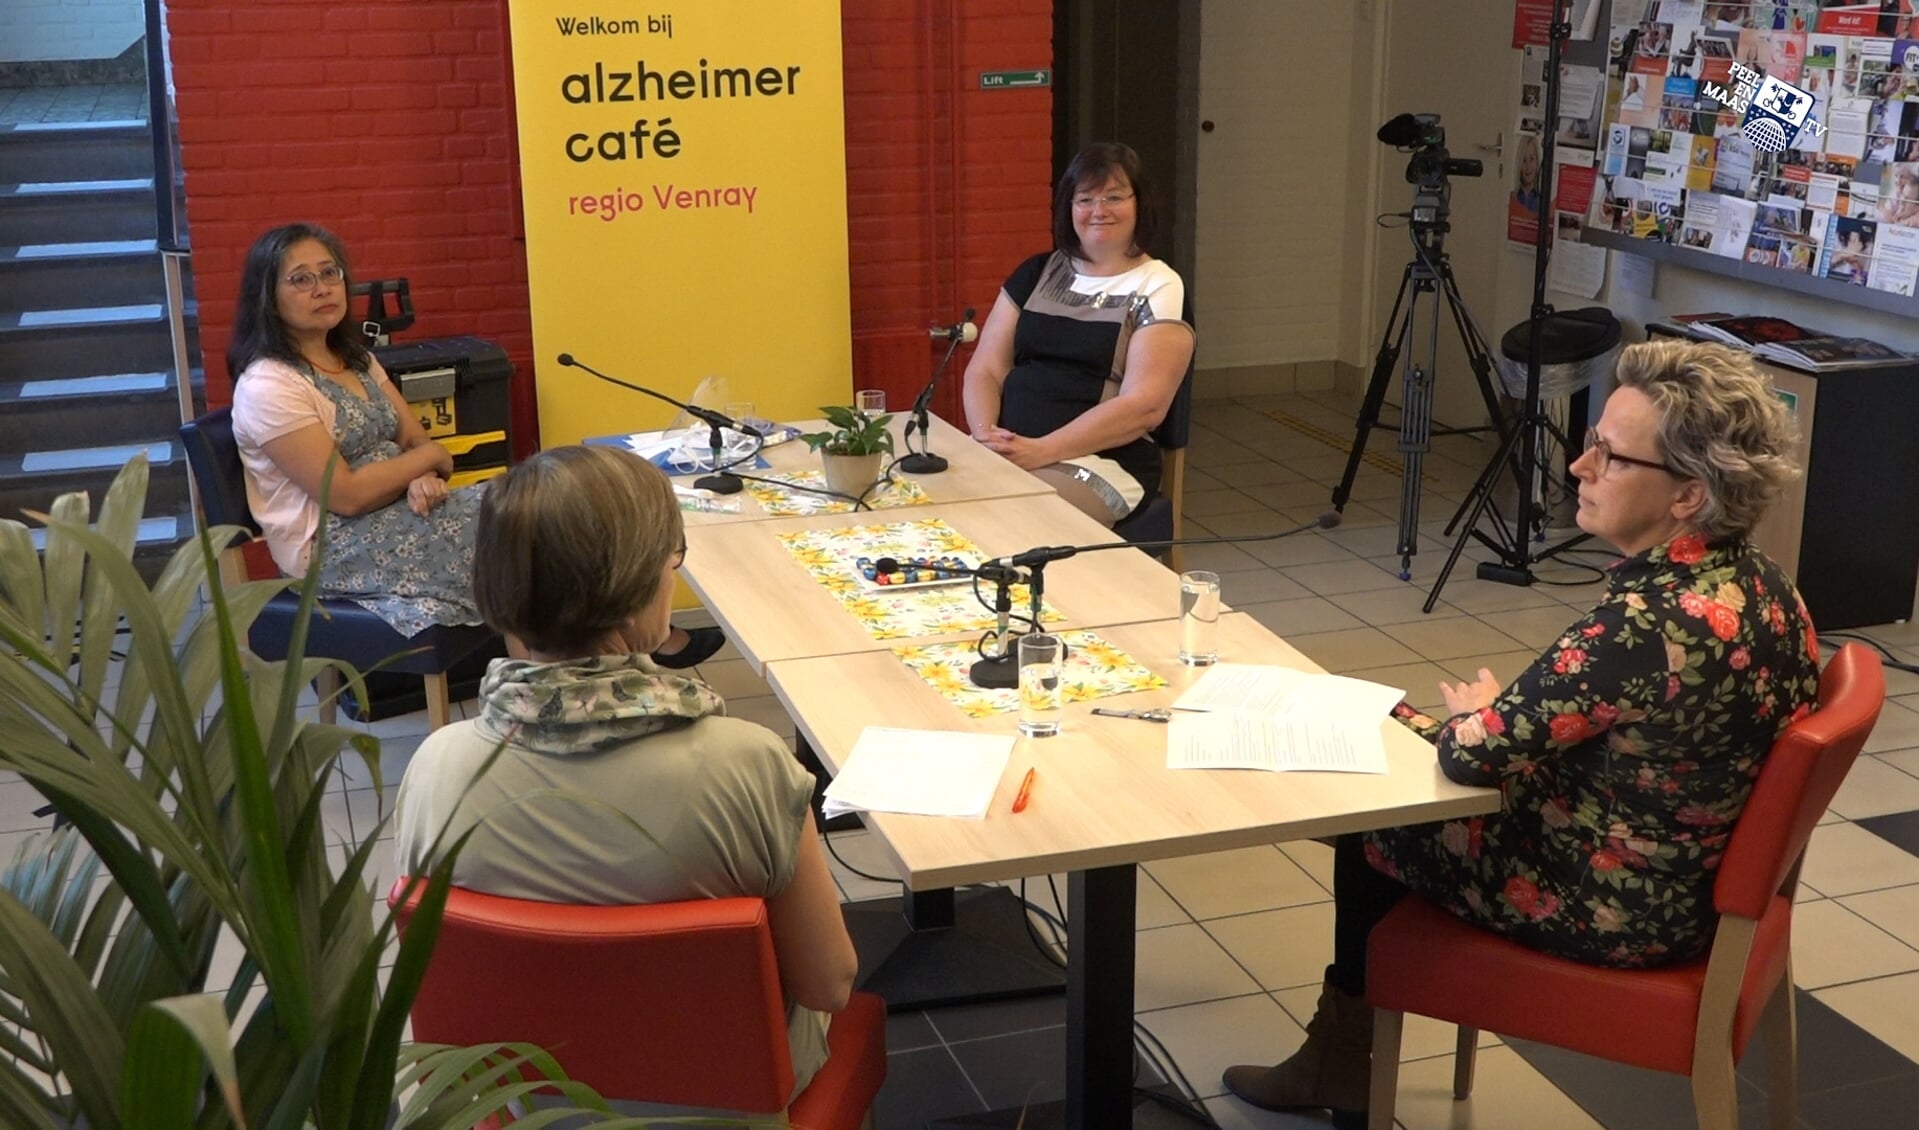 Komende maandag vindt er weer live een Alzheimer Café plaats. 